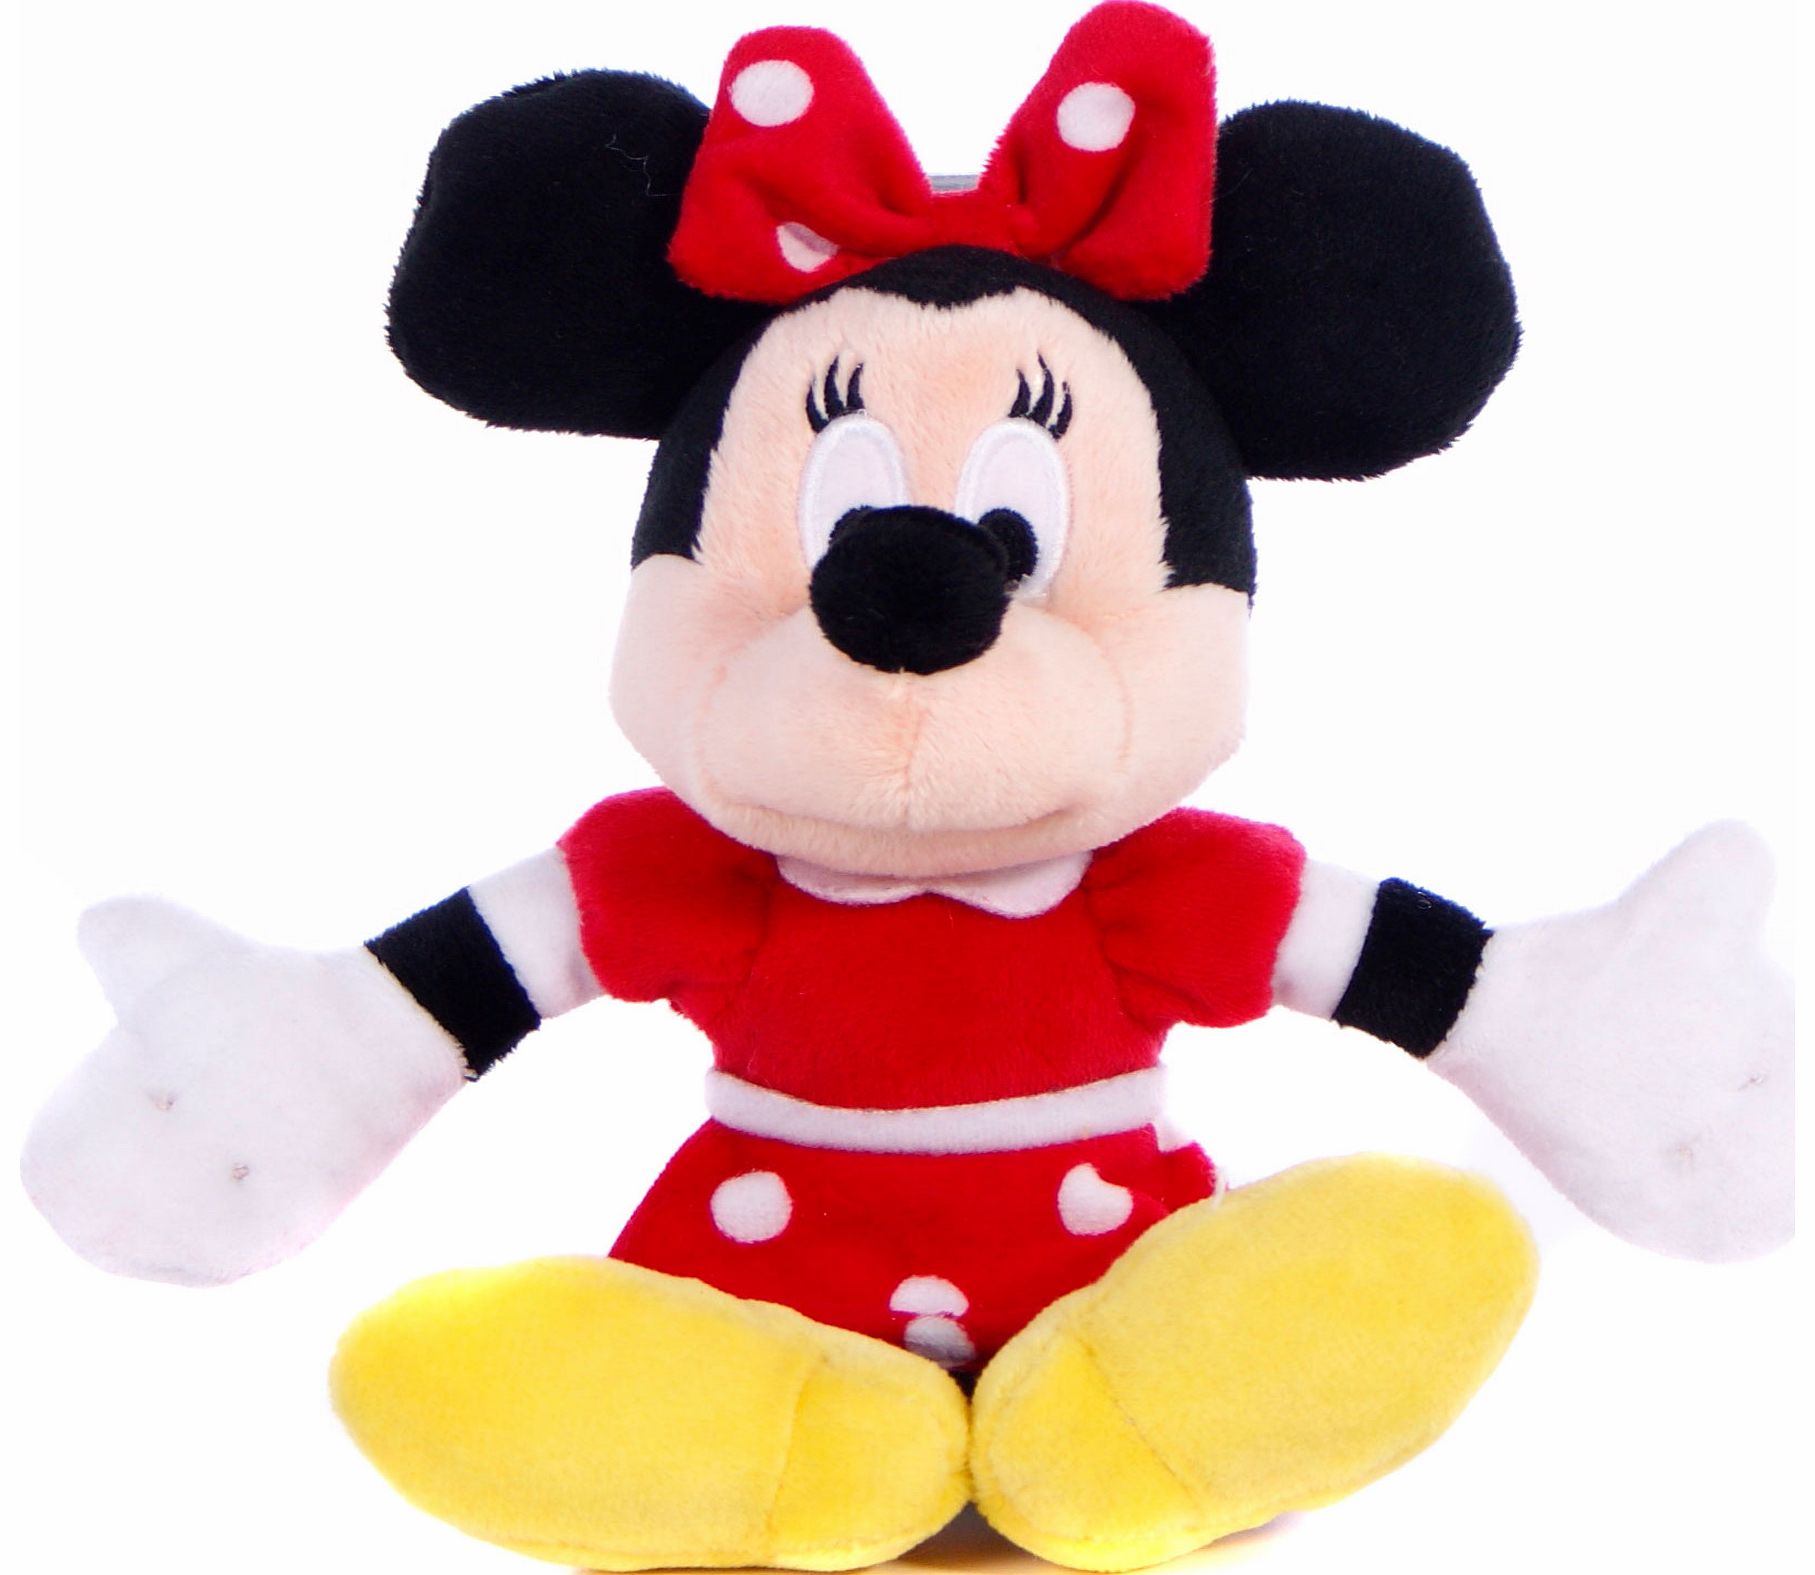 Disney Red Dress Disney Minnie Mouse 8`` Soft Toy